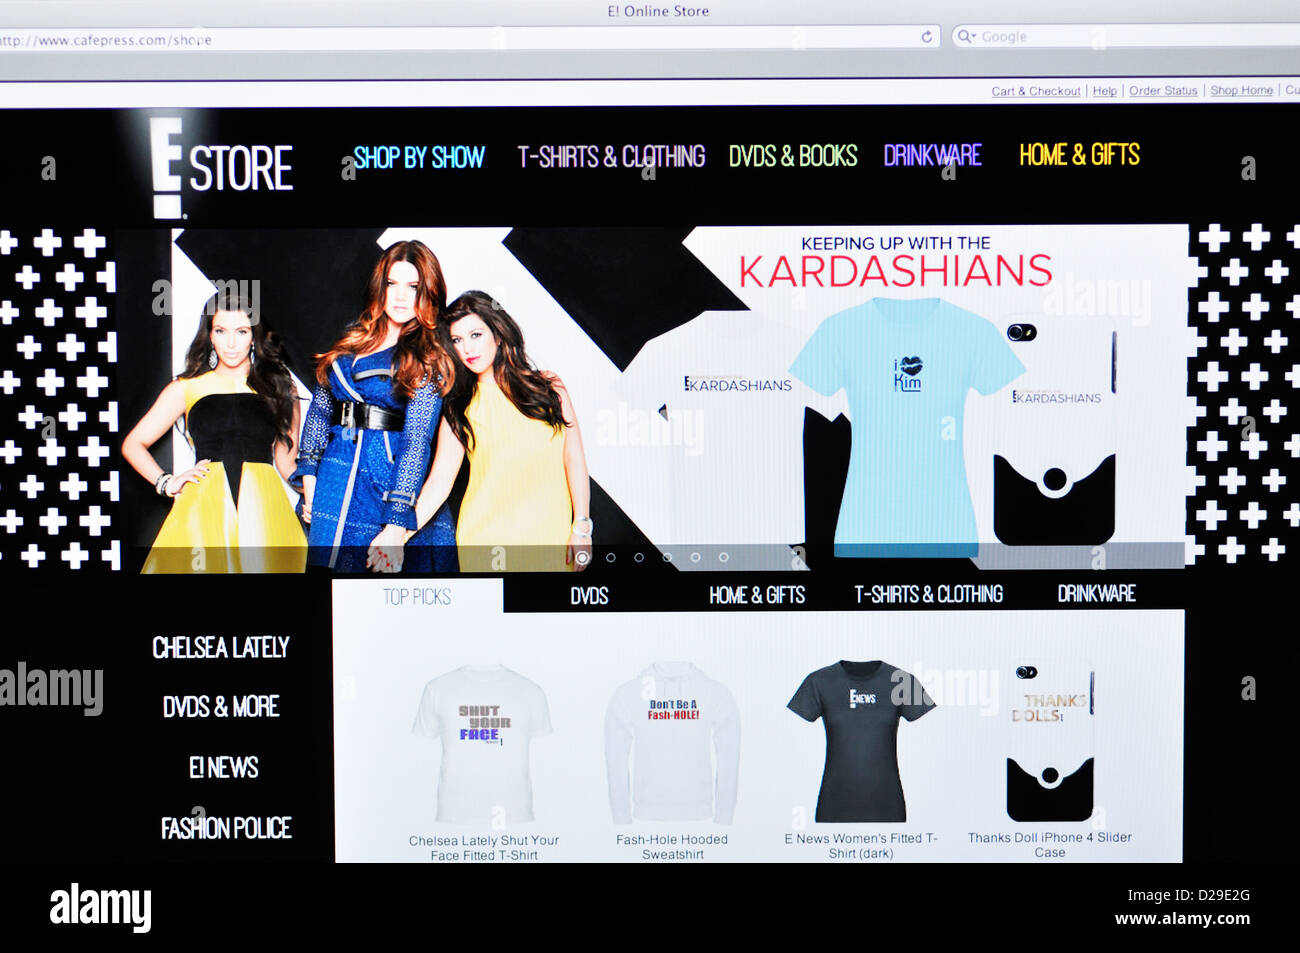 Cafepress website - online customized product shopping Stock Photo